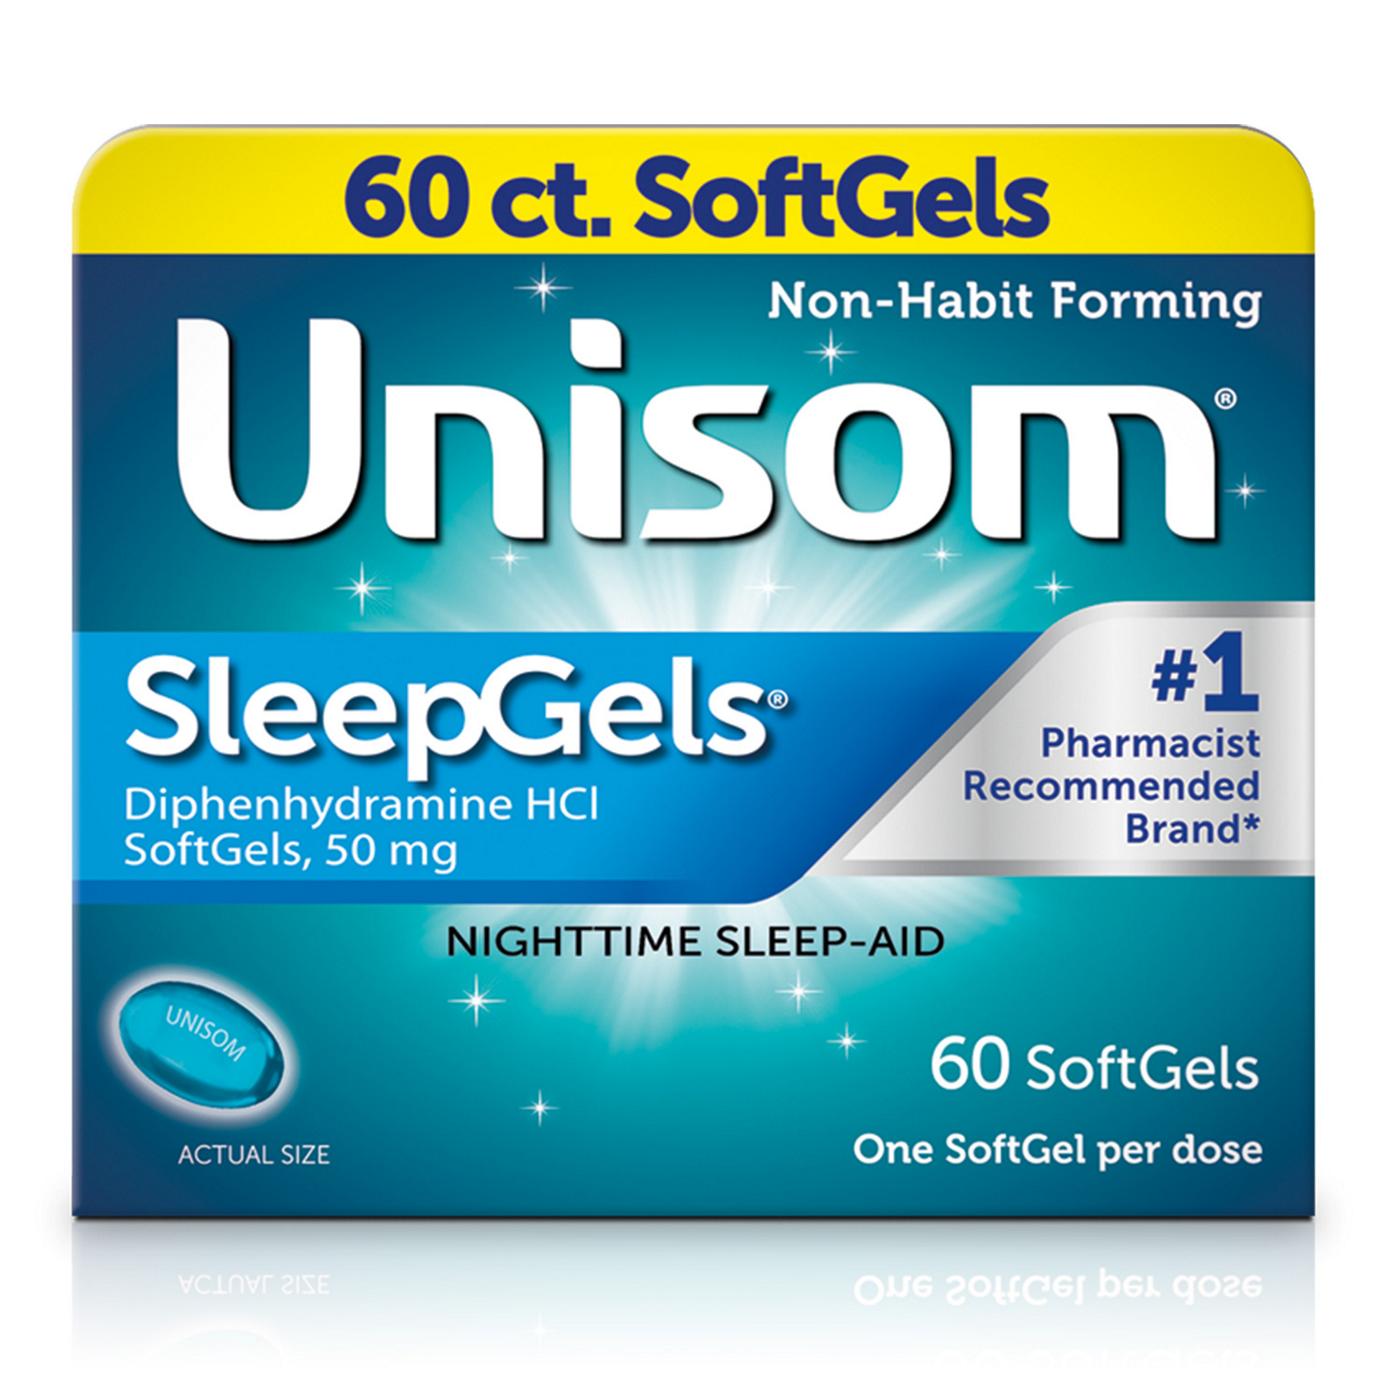 Unisom SleepGels Nighttime Sleep-Aid SoftGels; image 1 of 6